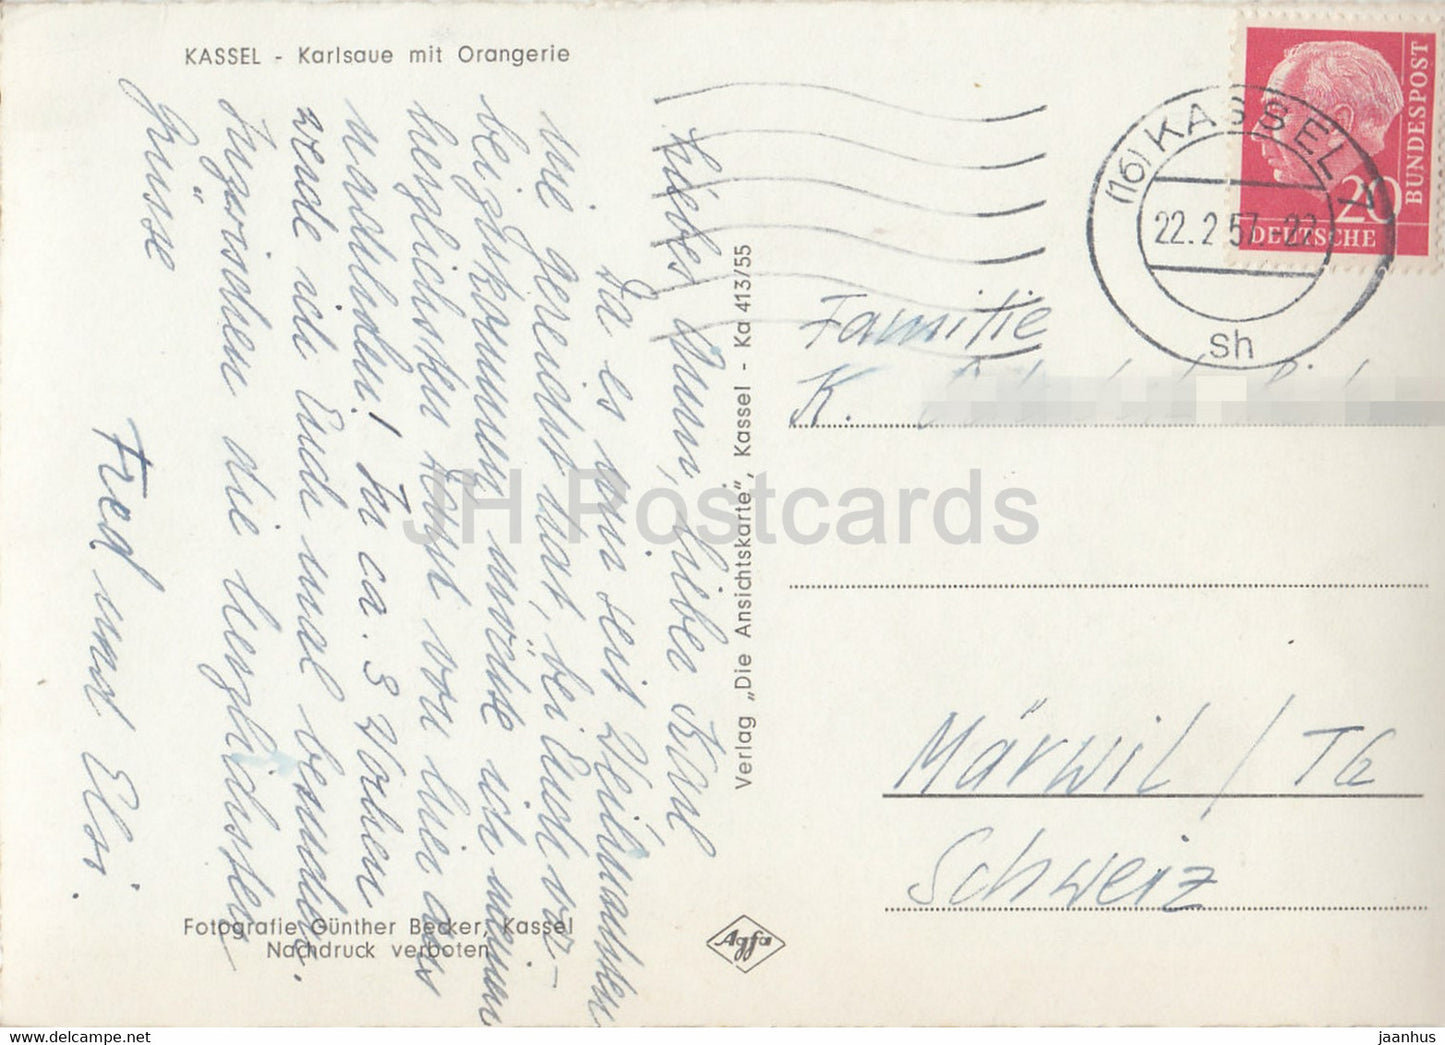 Kassel - Karlsaue mit Orangerie - carte postale ancienne - 1957 - Allemagne - utilisé